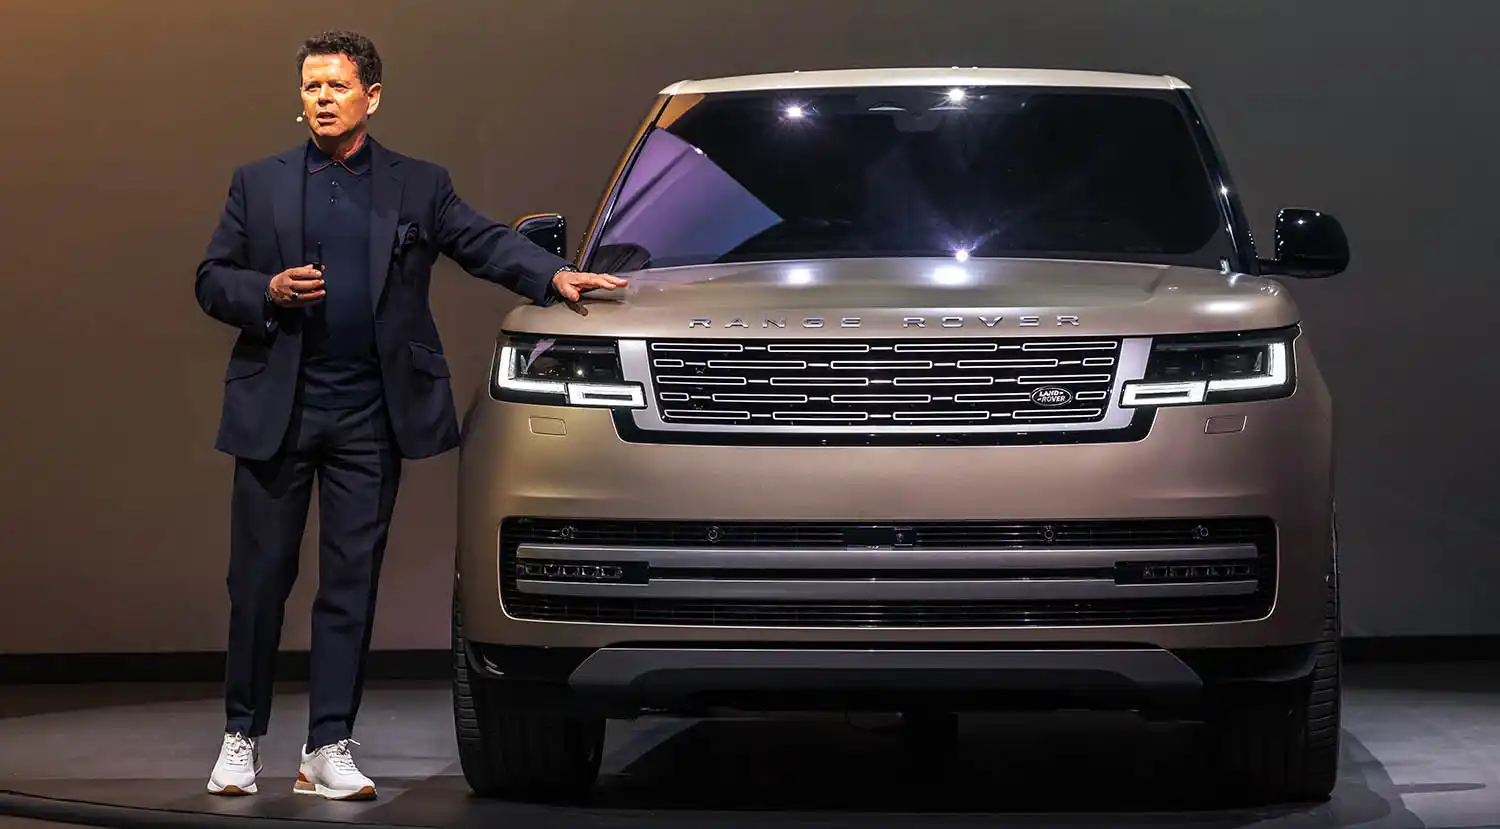 The All-New Range Rover – Breathtaking Modernity